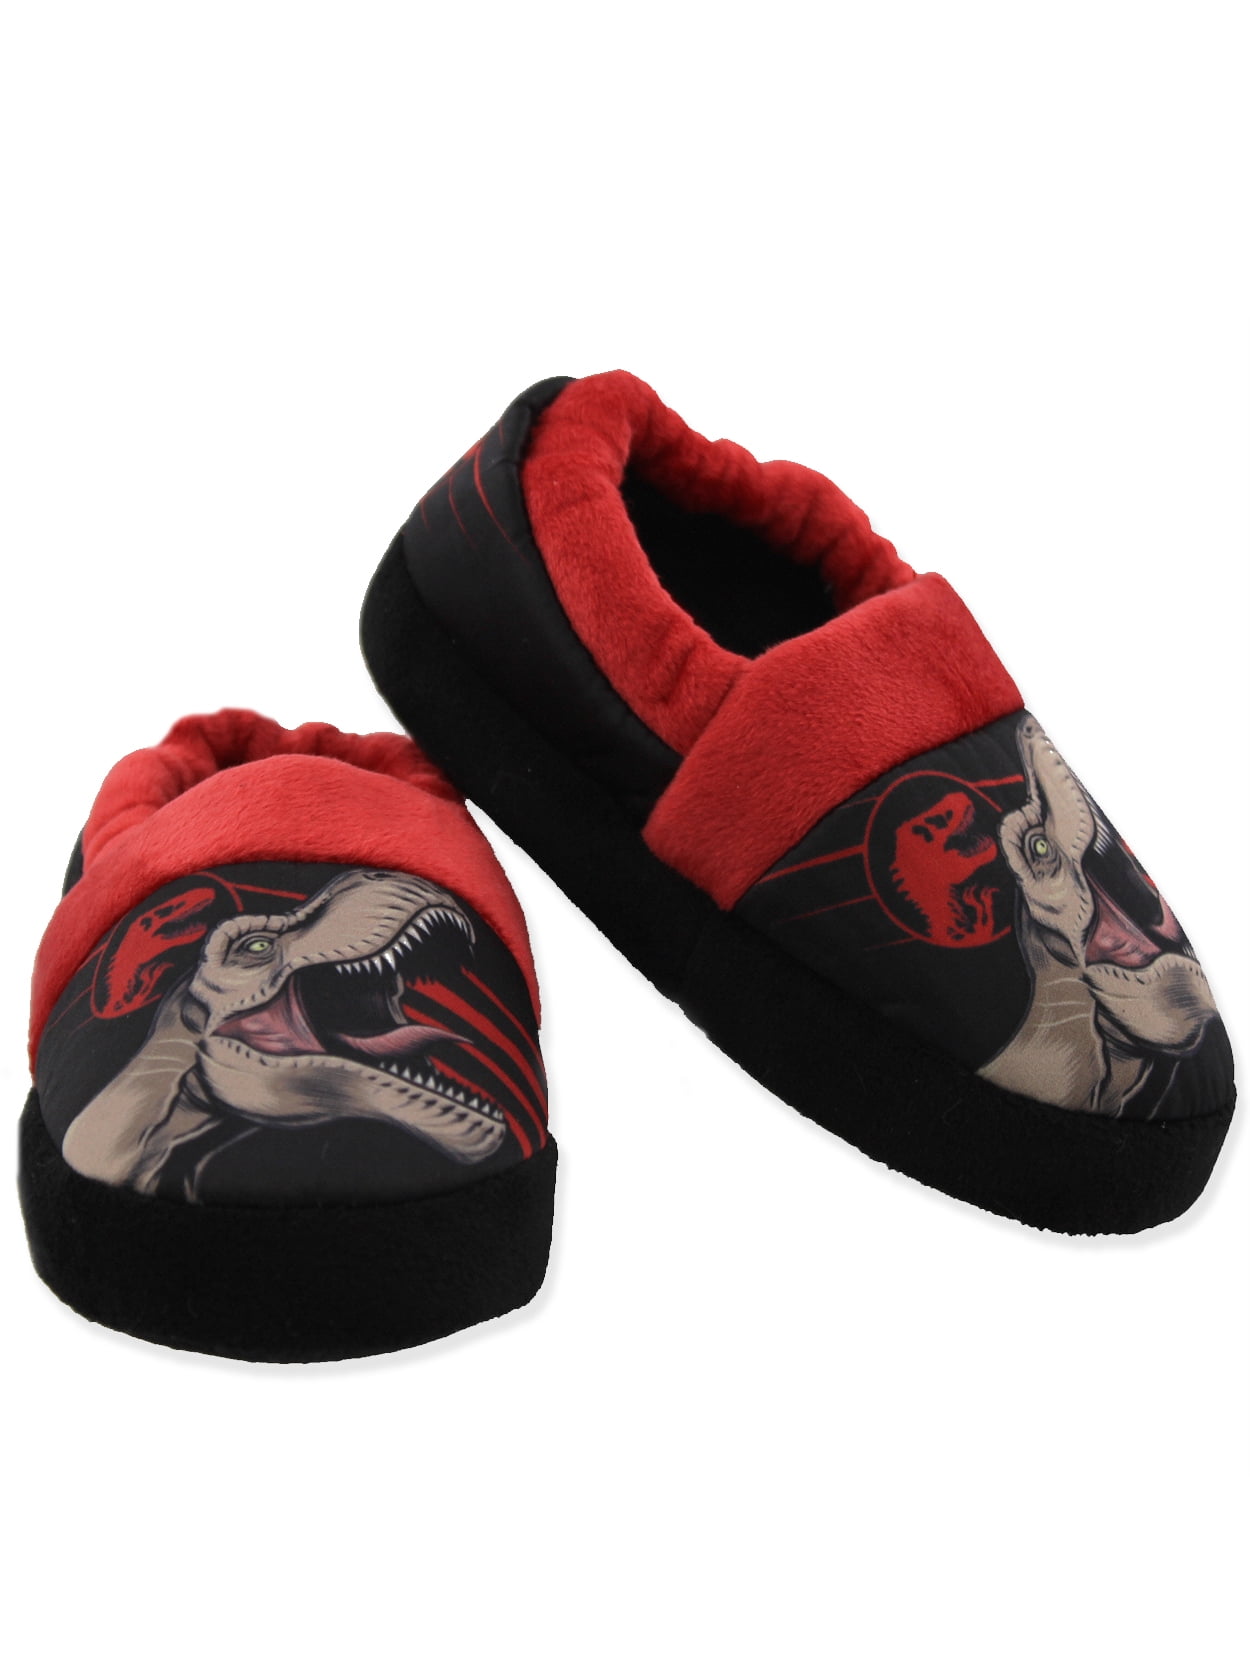 jurassic world slippers